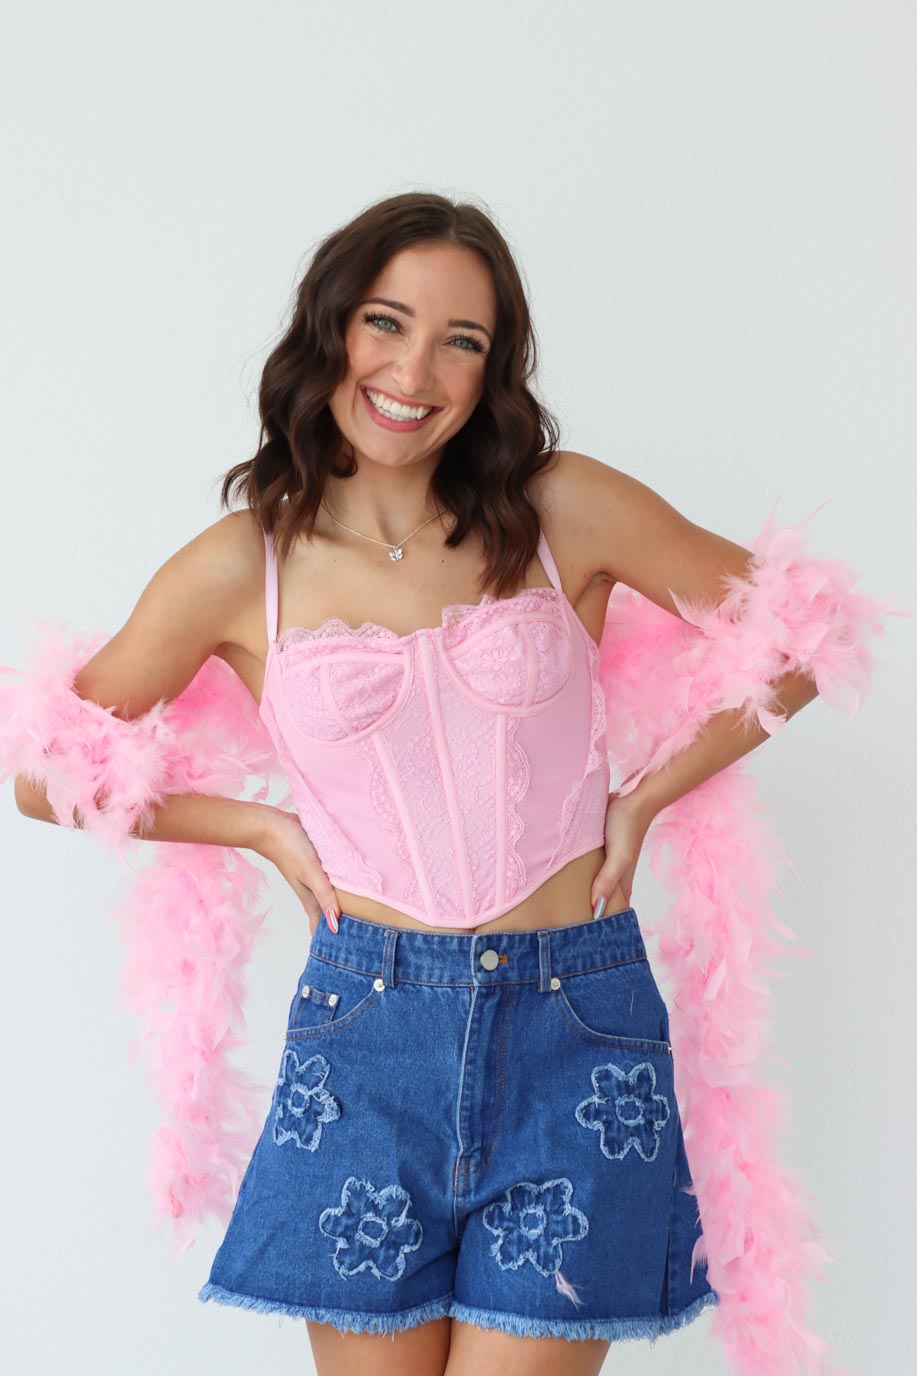 girl wearing pink corset top